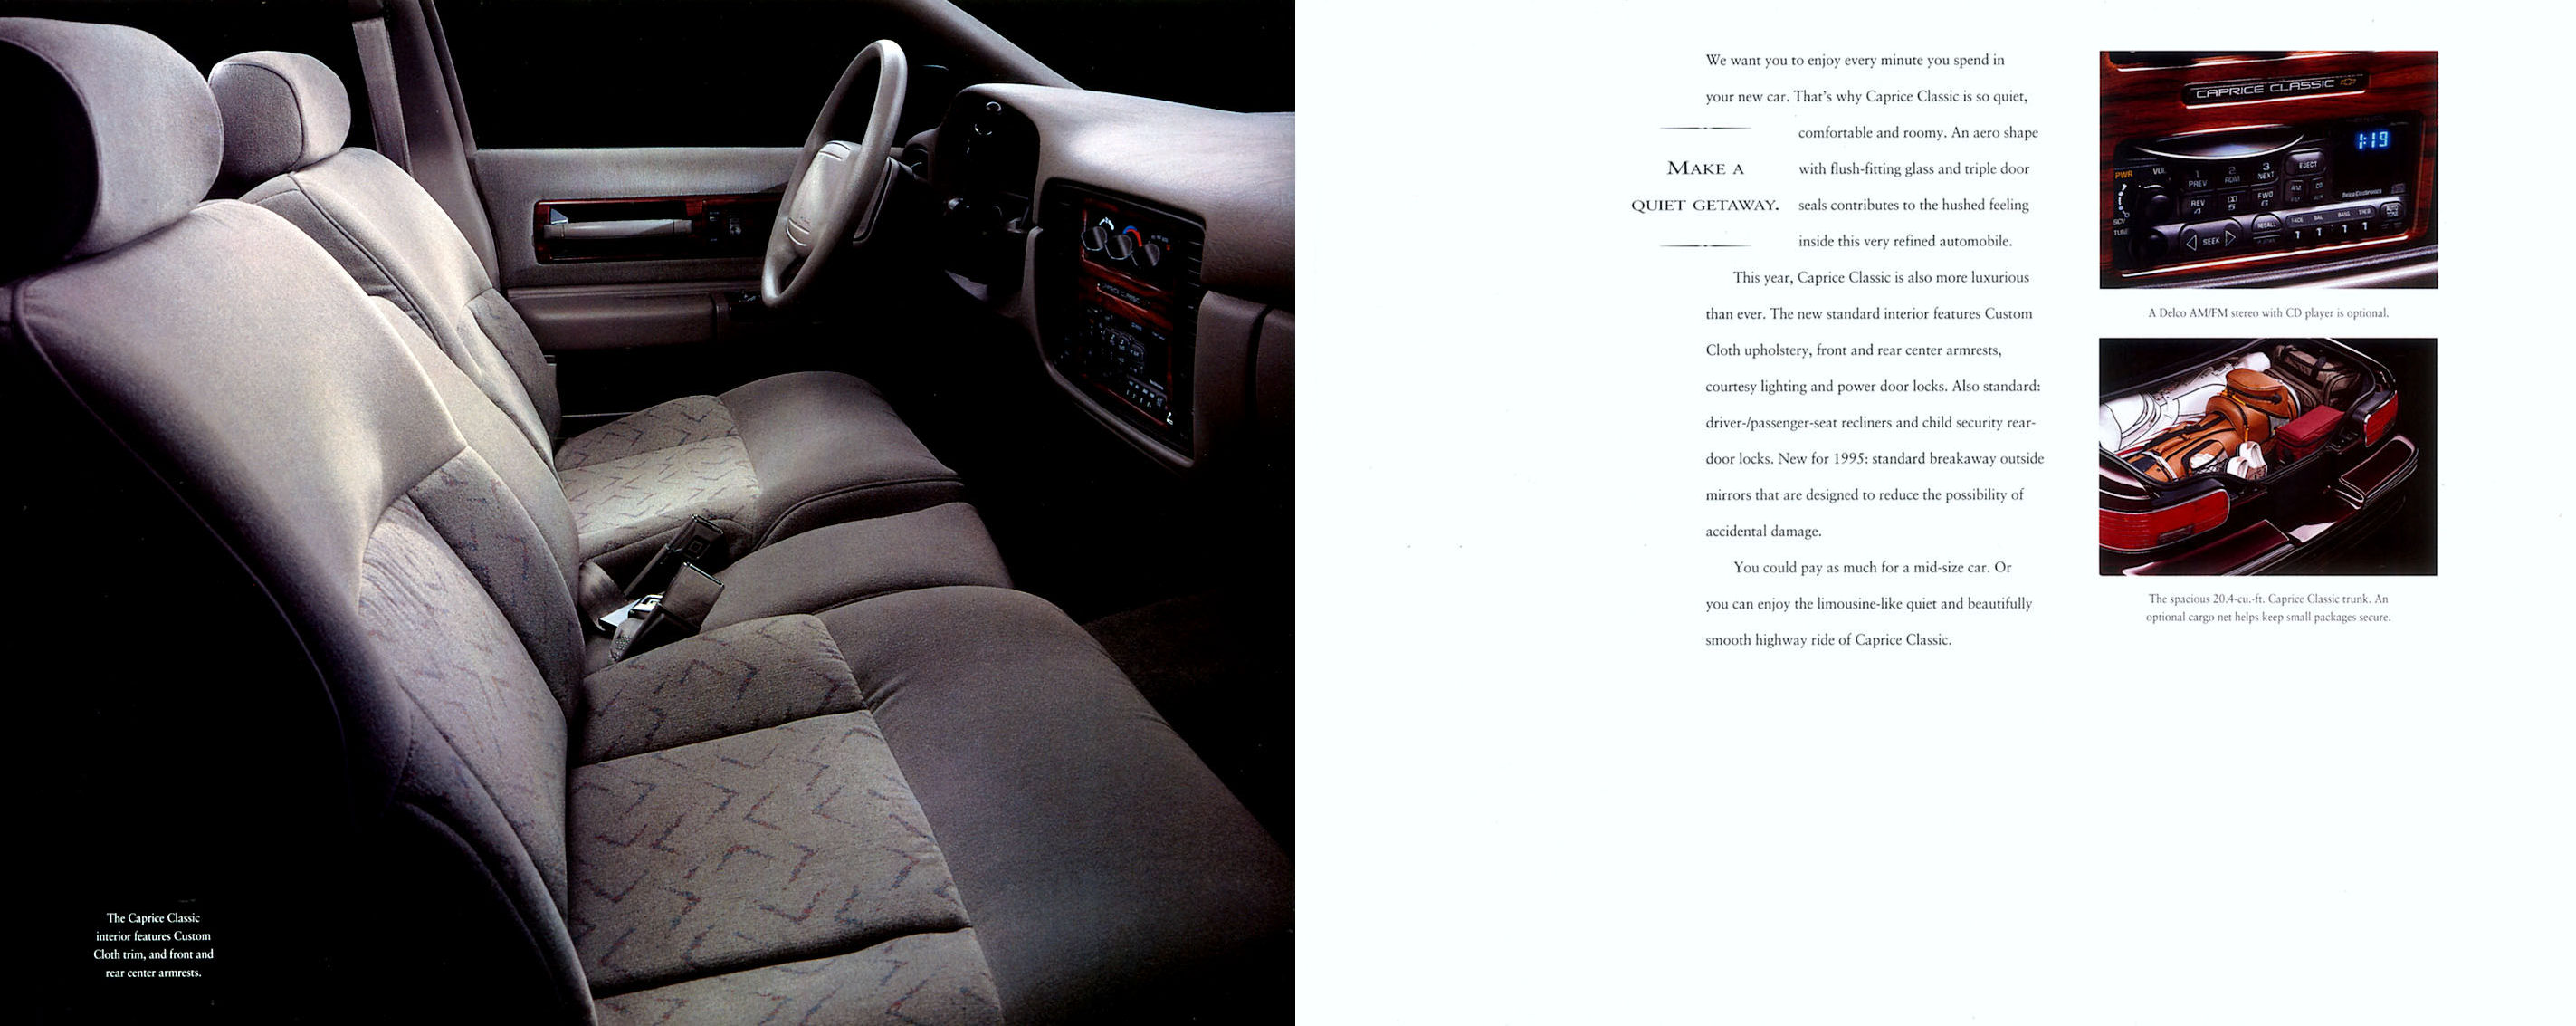 1995_Chevrolet_Caprice_Classic-10-11